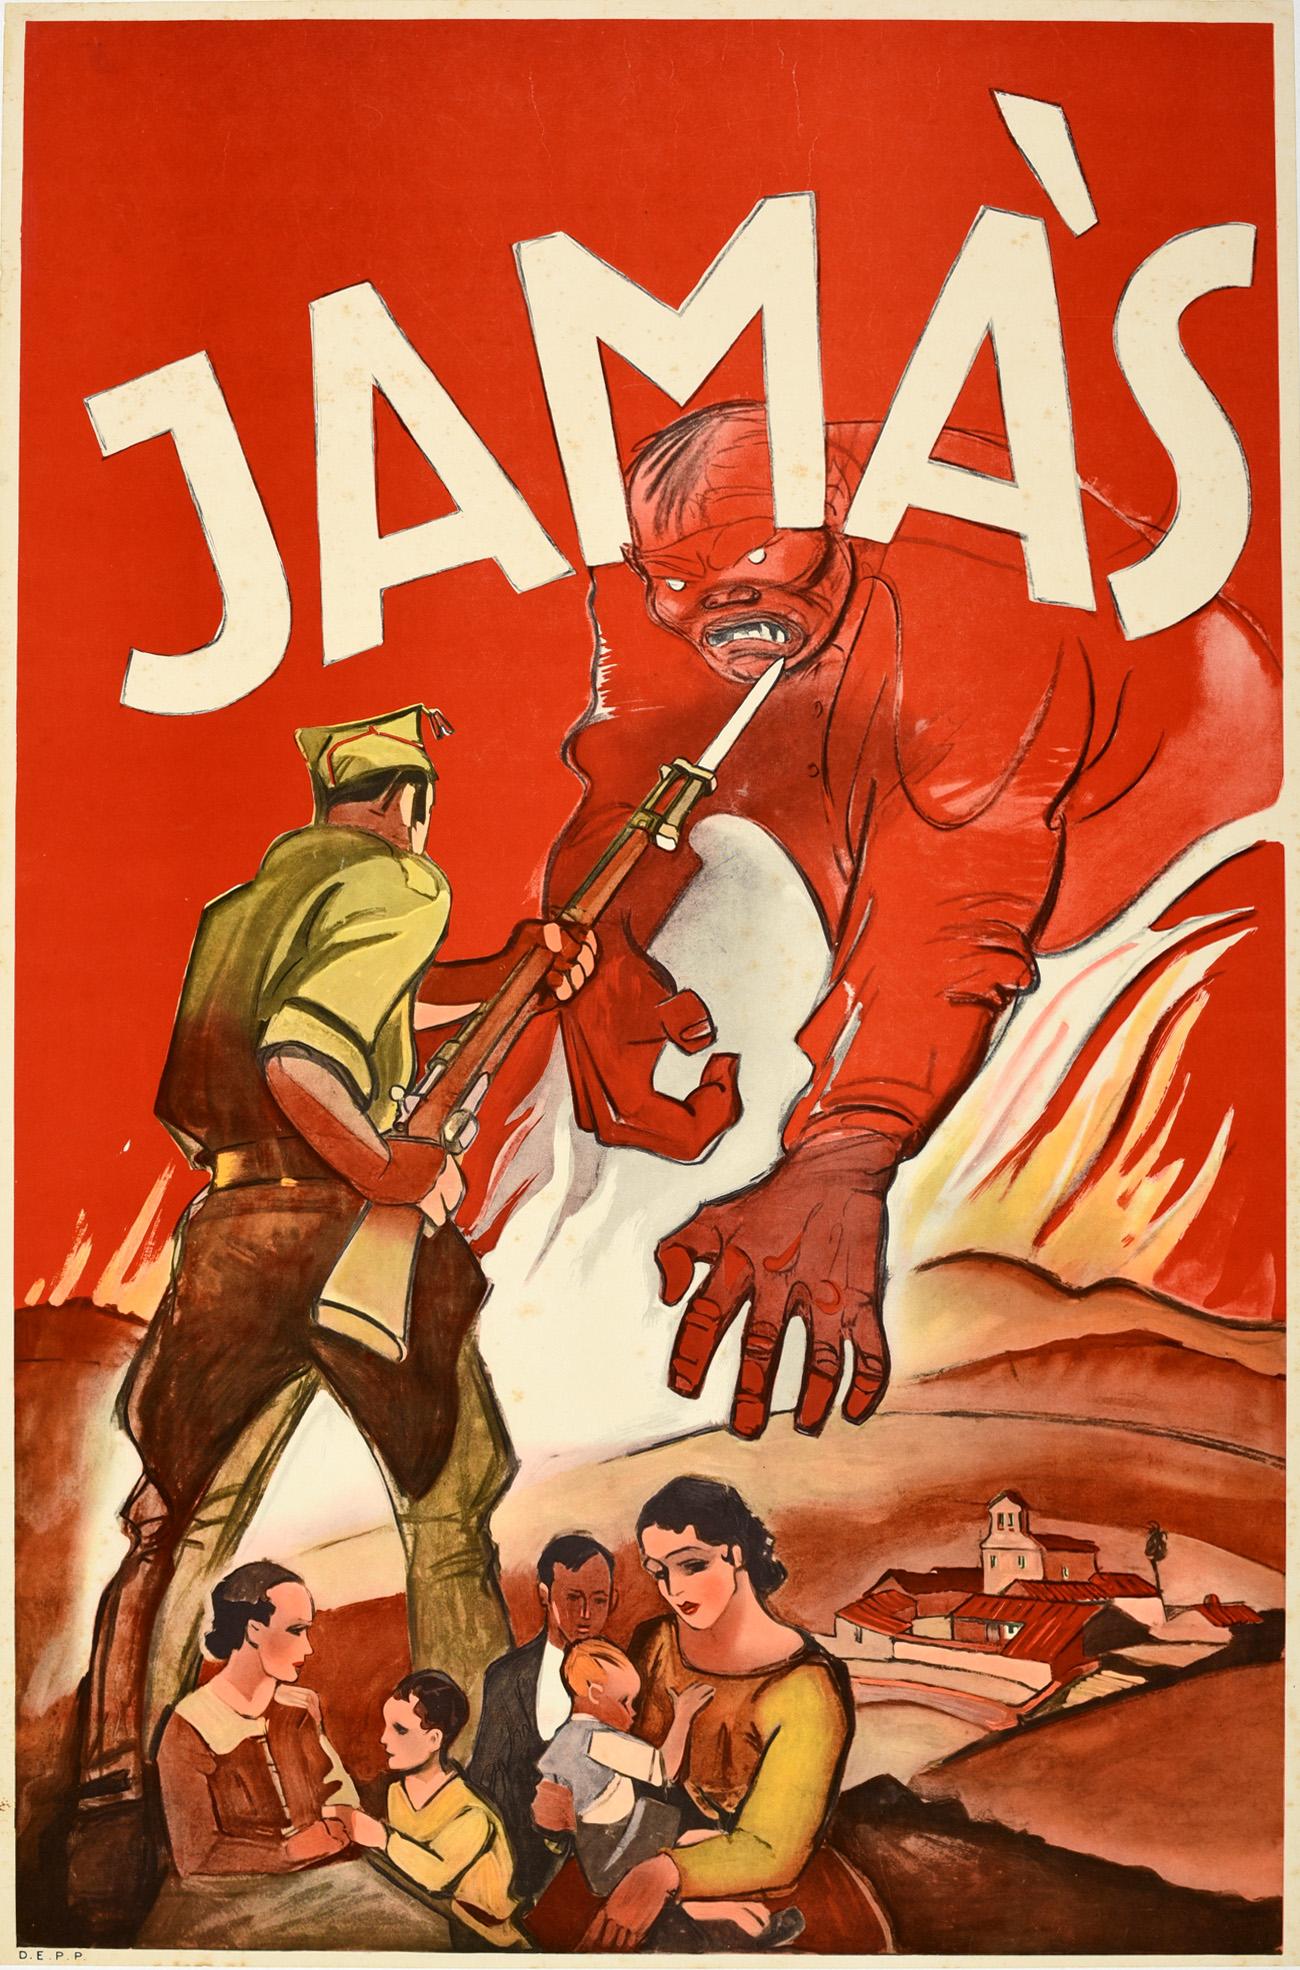 Unknown Print - Original Vintage Anti Communist Spanish Civil War Propaganda Poster Jamas Never